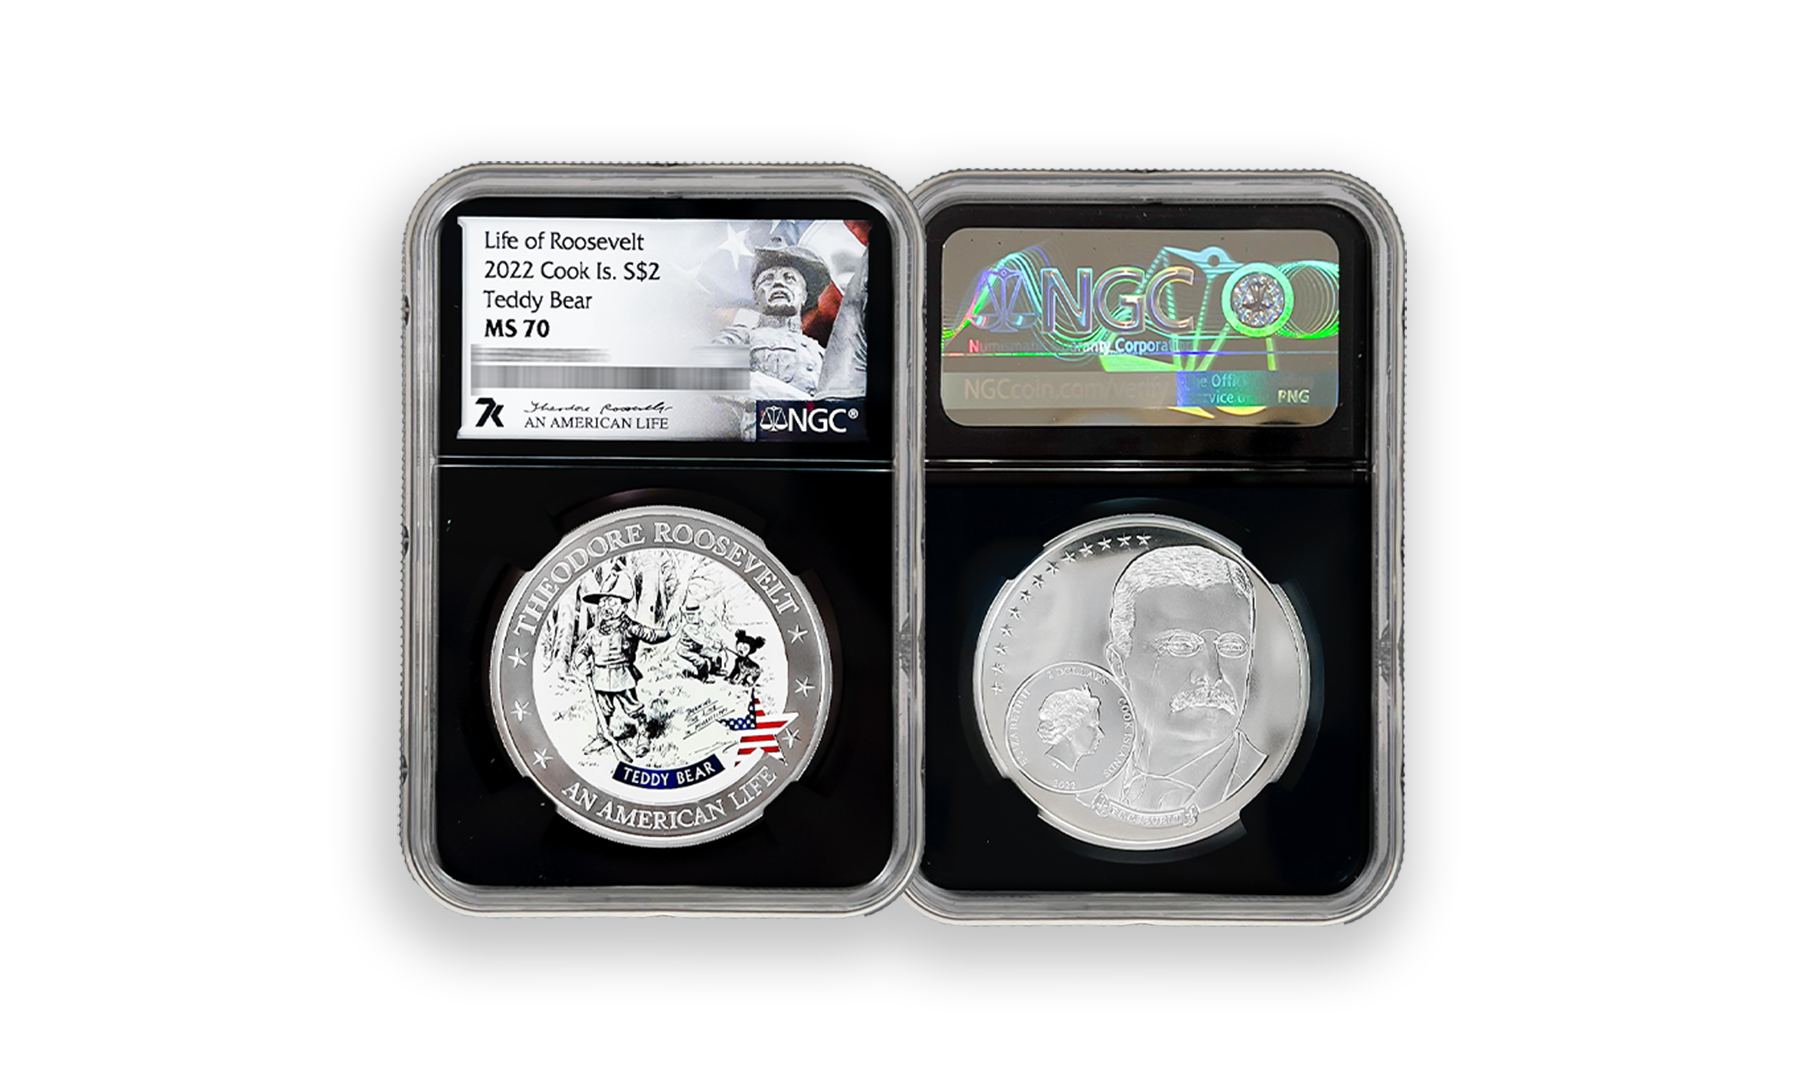 2022 Life of Roosevelt Teddy Bear 1/2 oz Silver Coin PF70